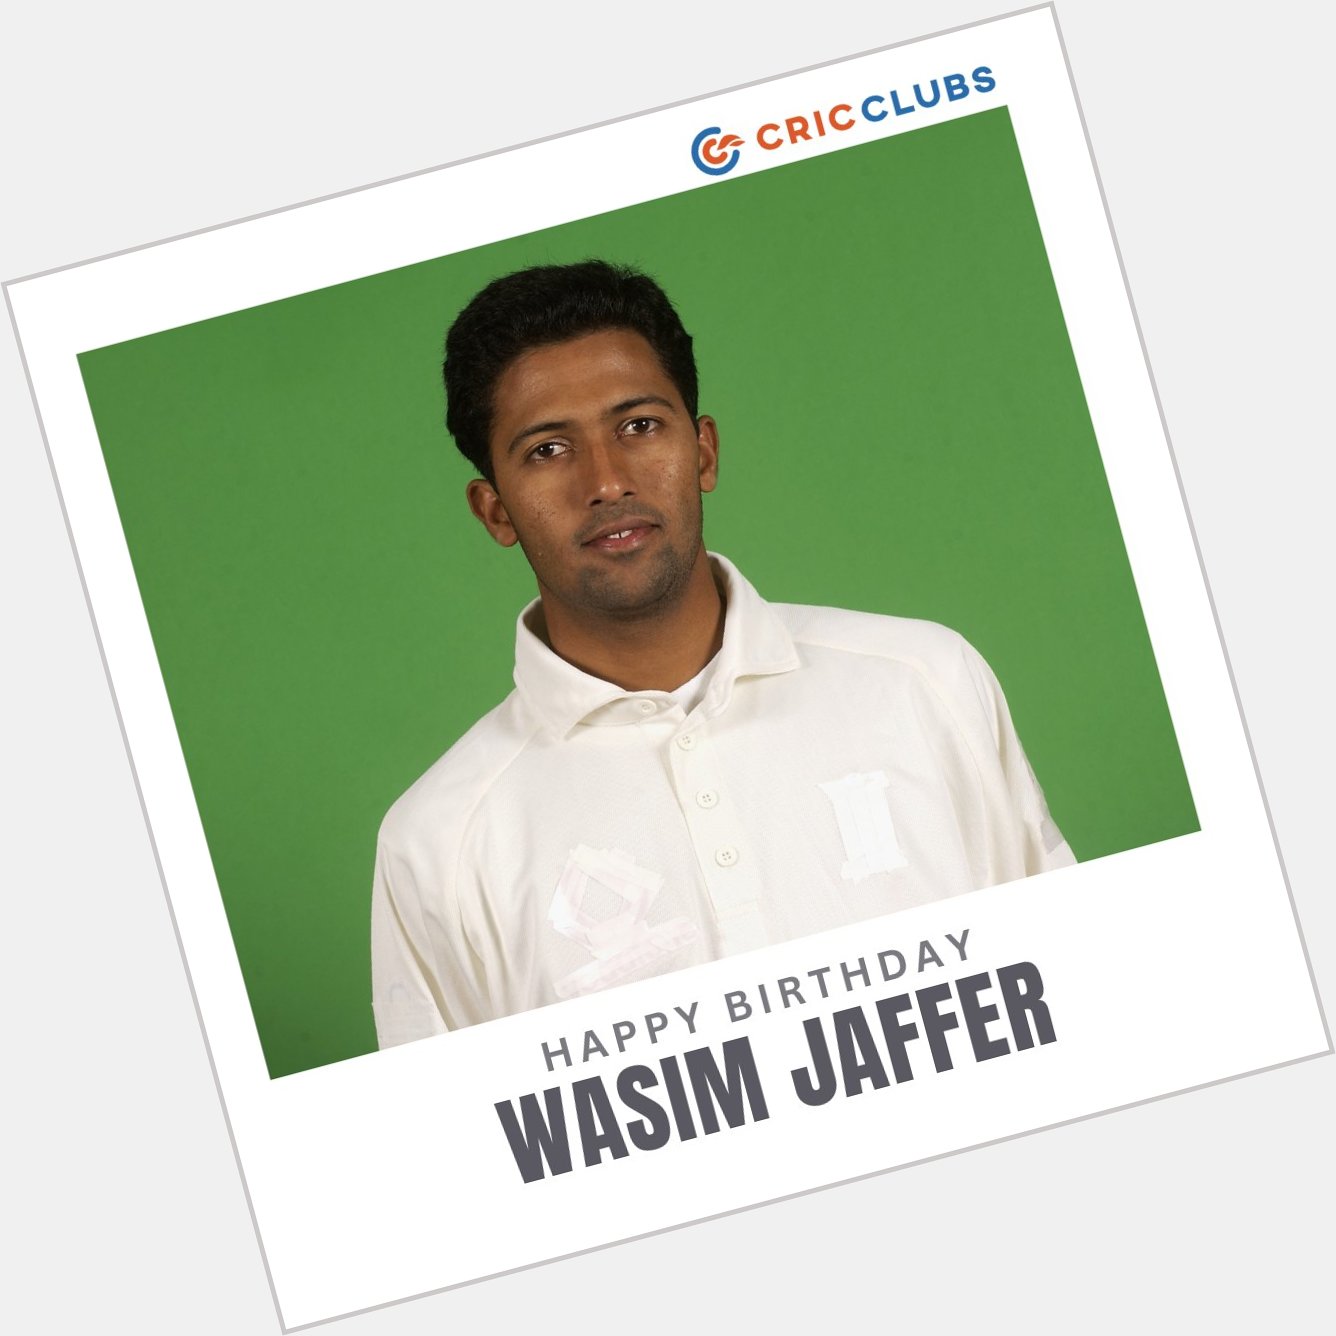   Happy Birthday Wasim Jaffer! 